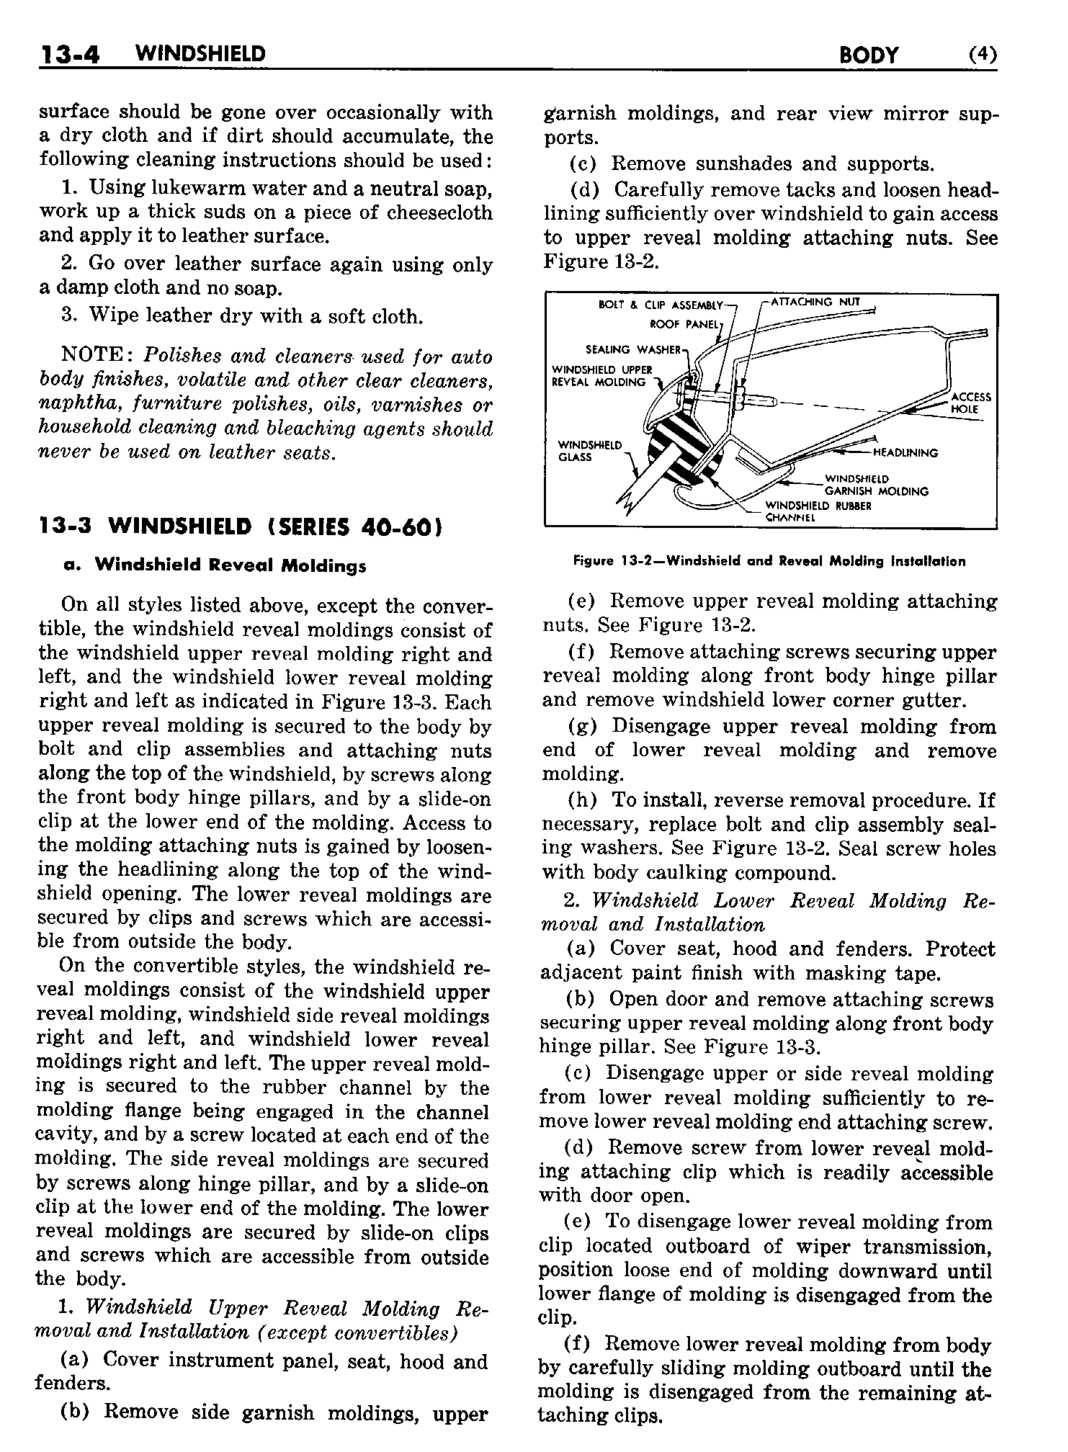 n_1958 Buick Body Service Manual-005-005.jpg